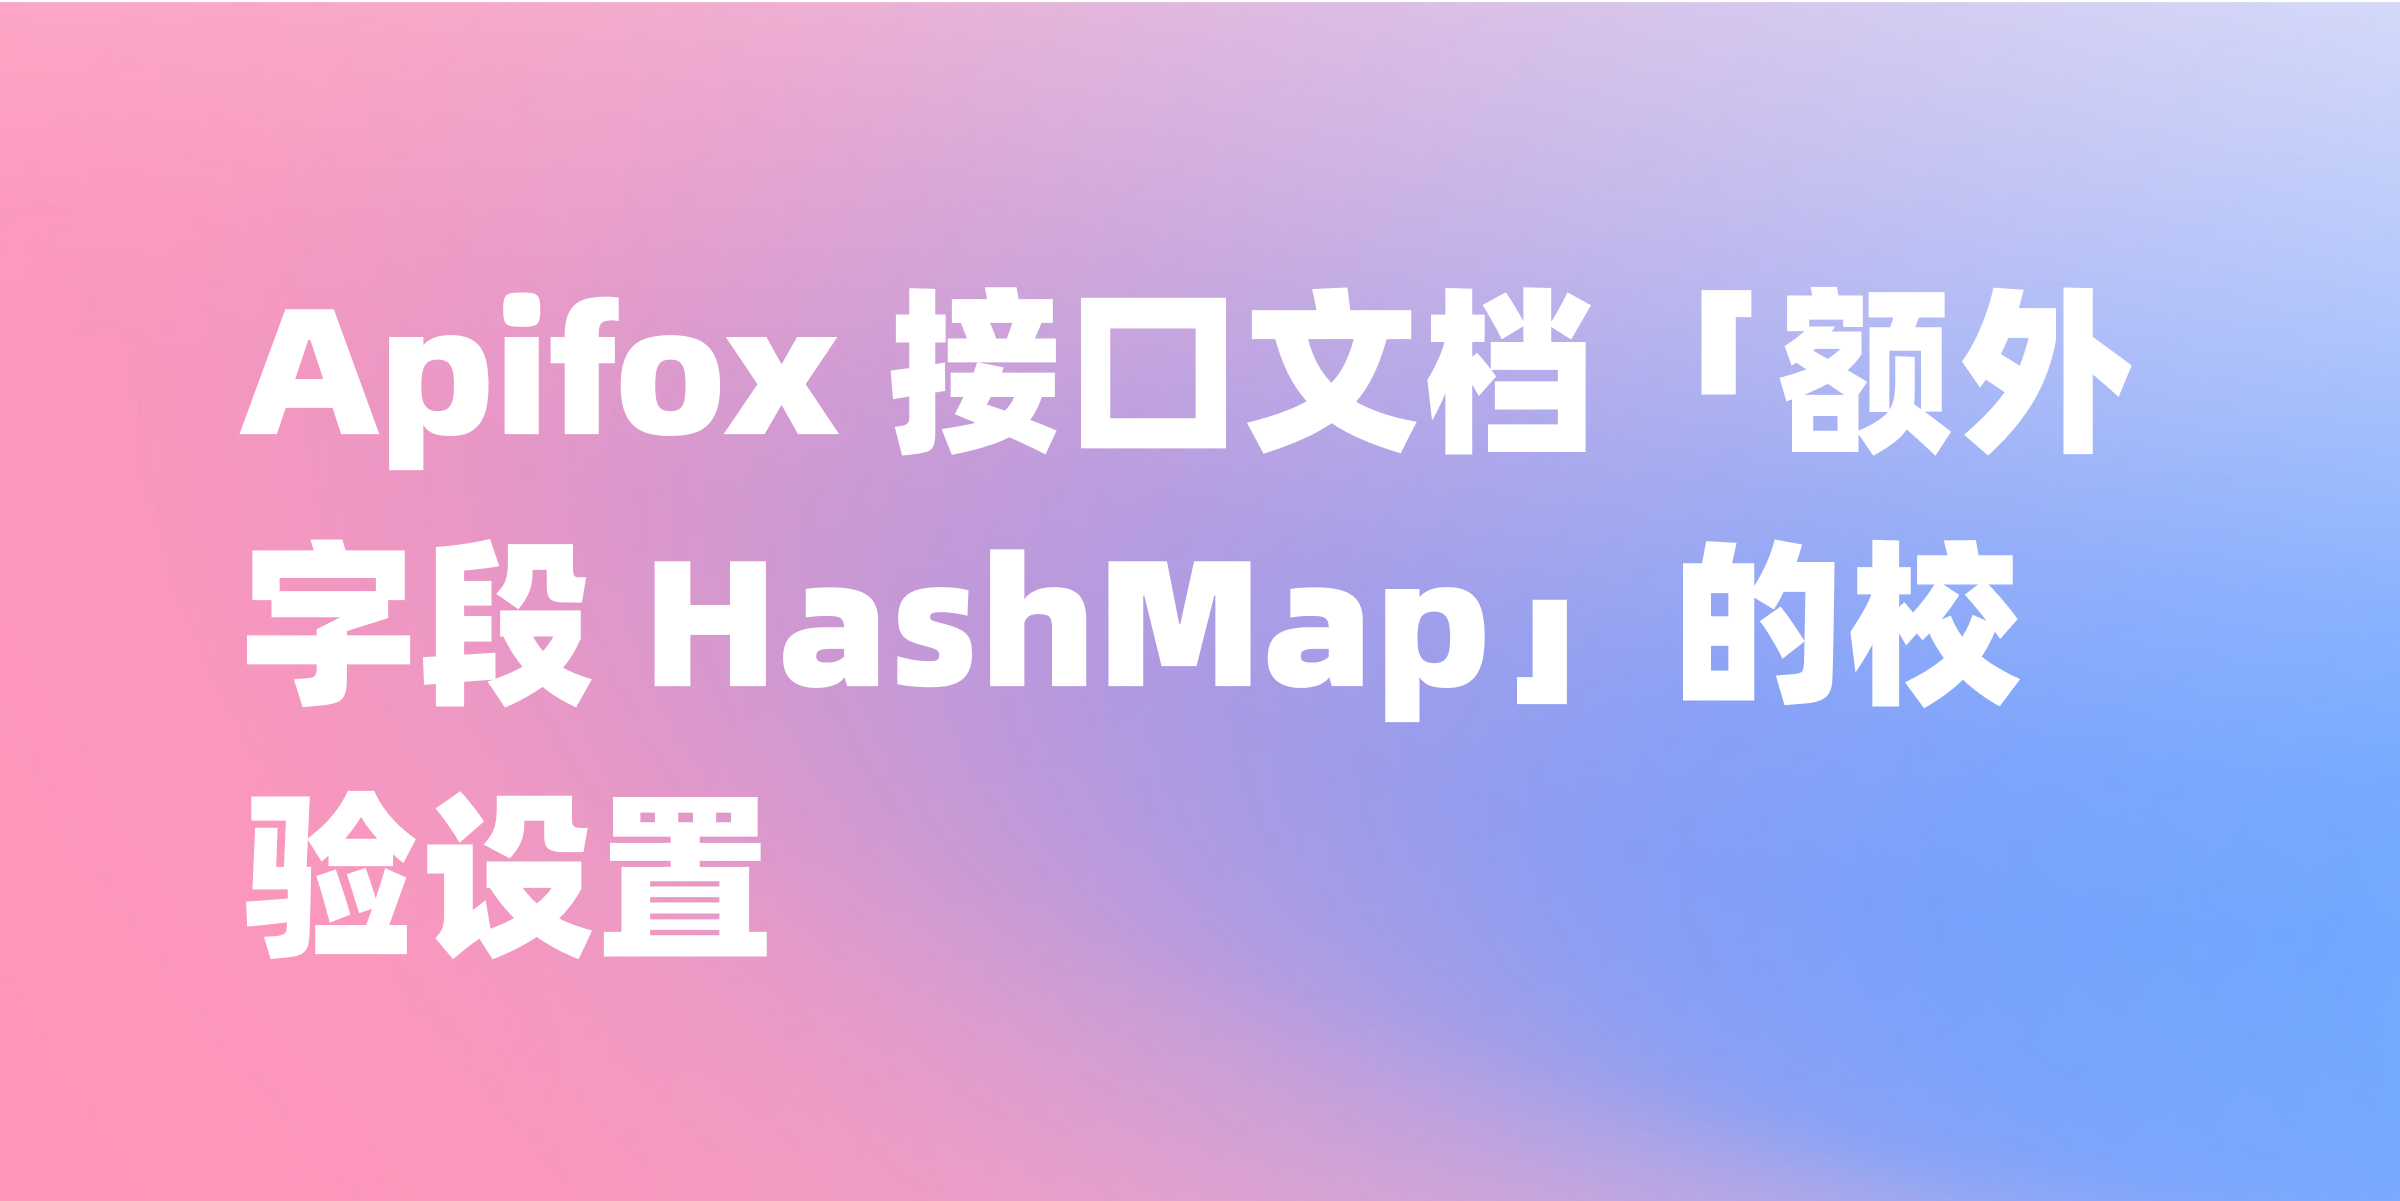 Apifox 接口文档「额外字段 HashMap」的校验设置